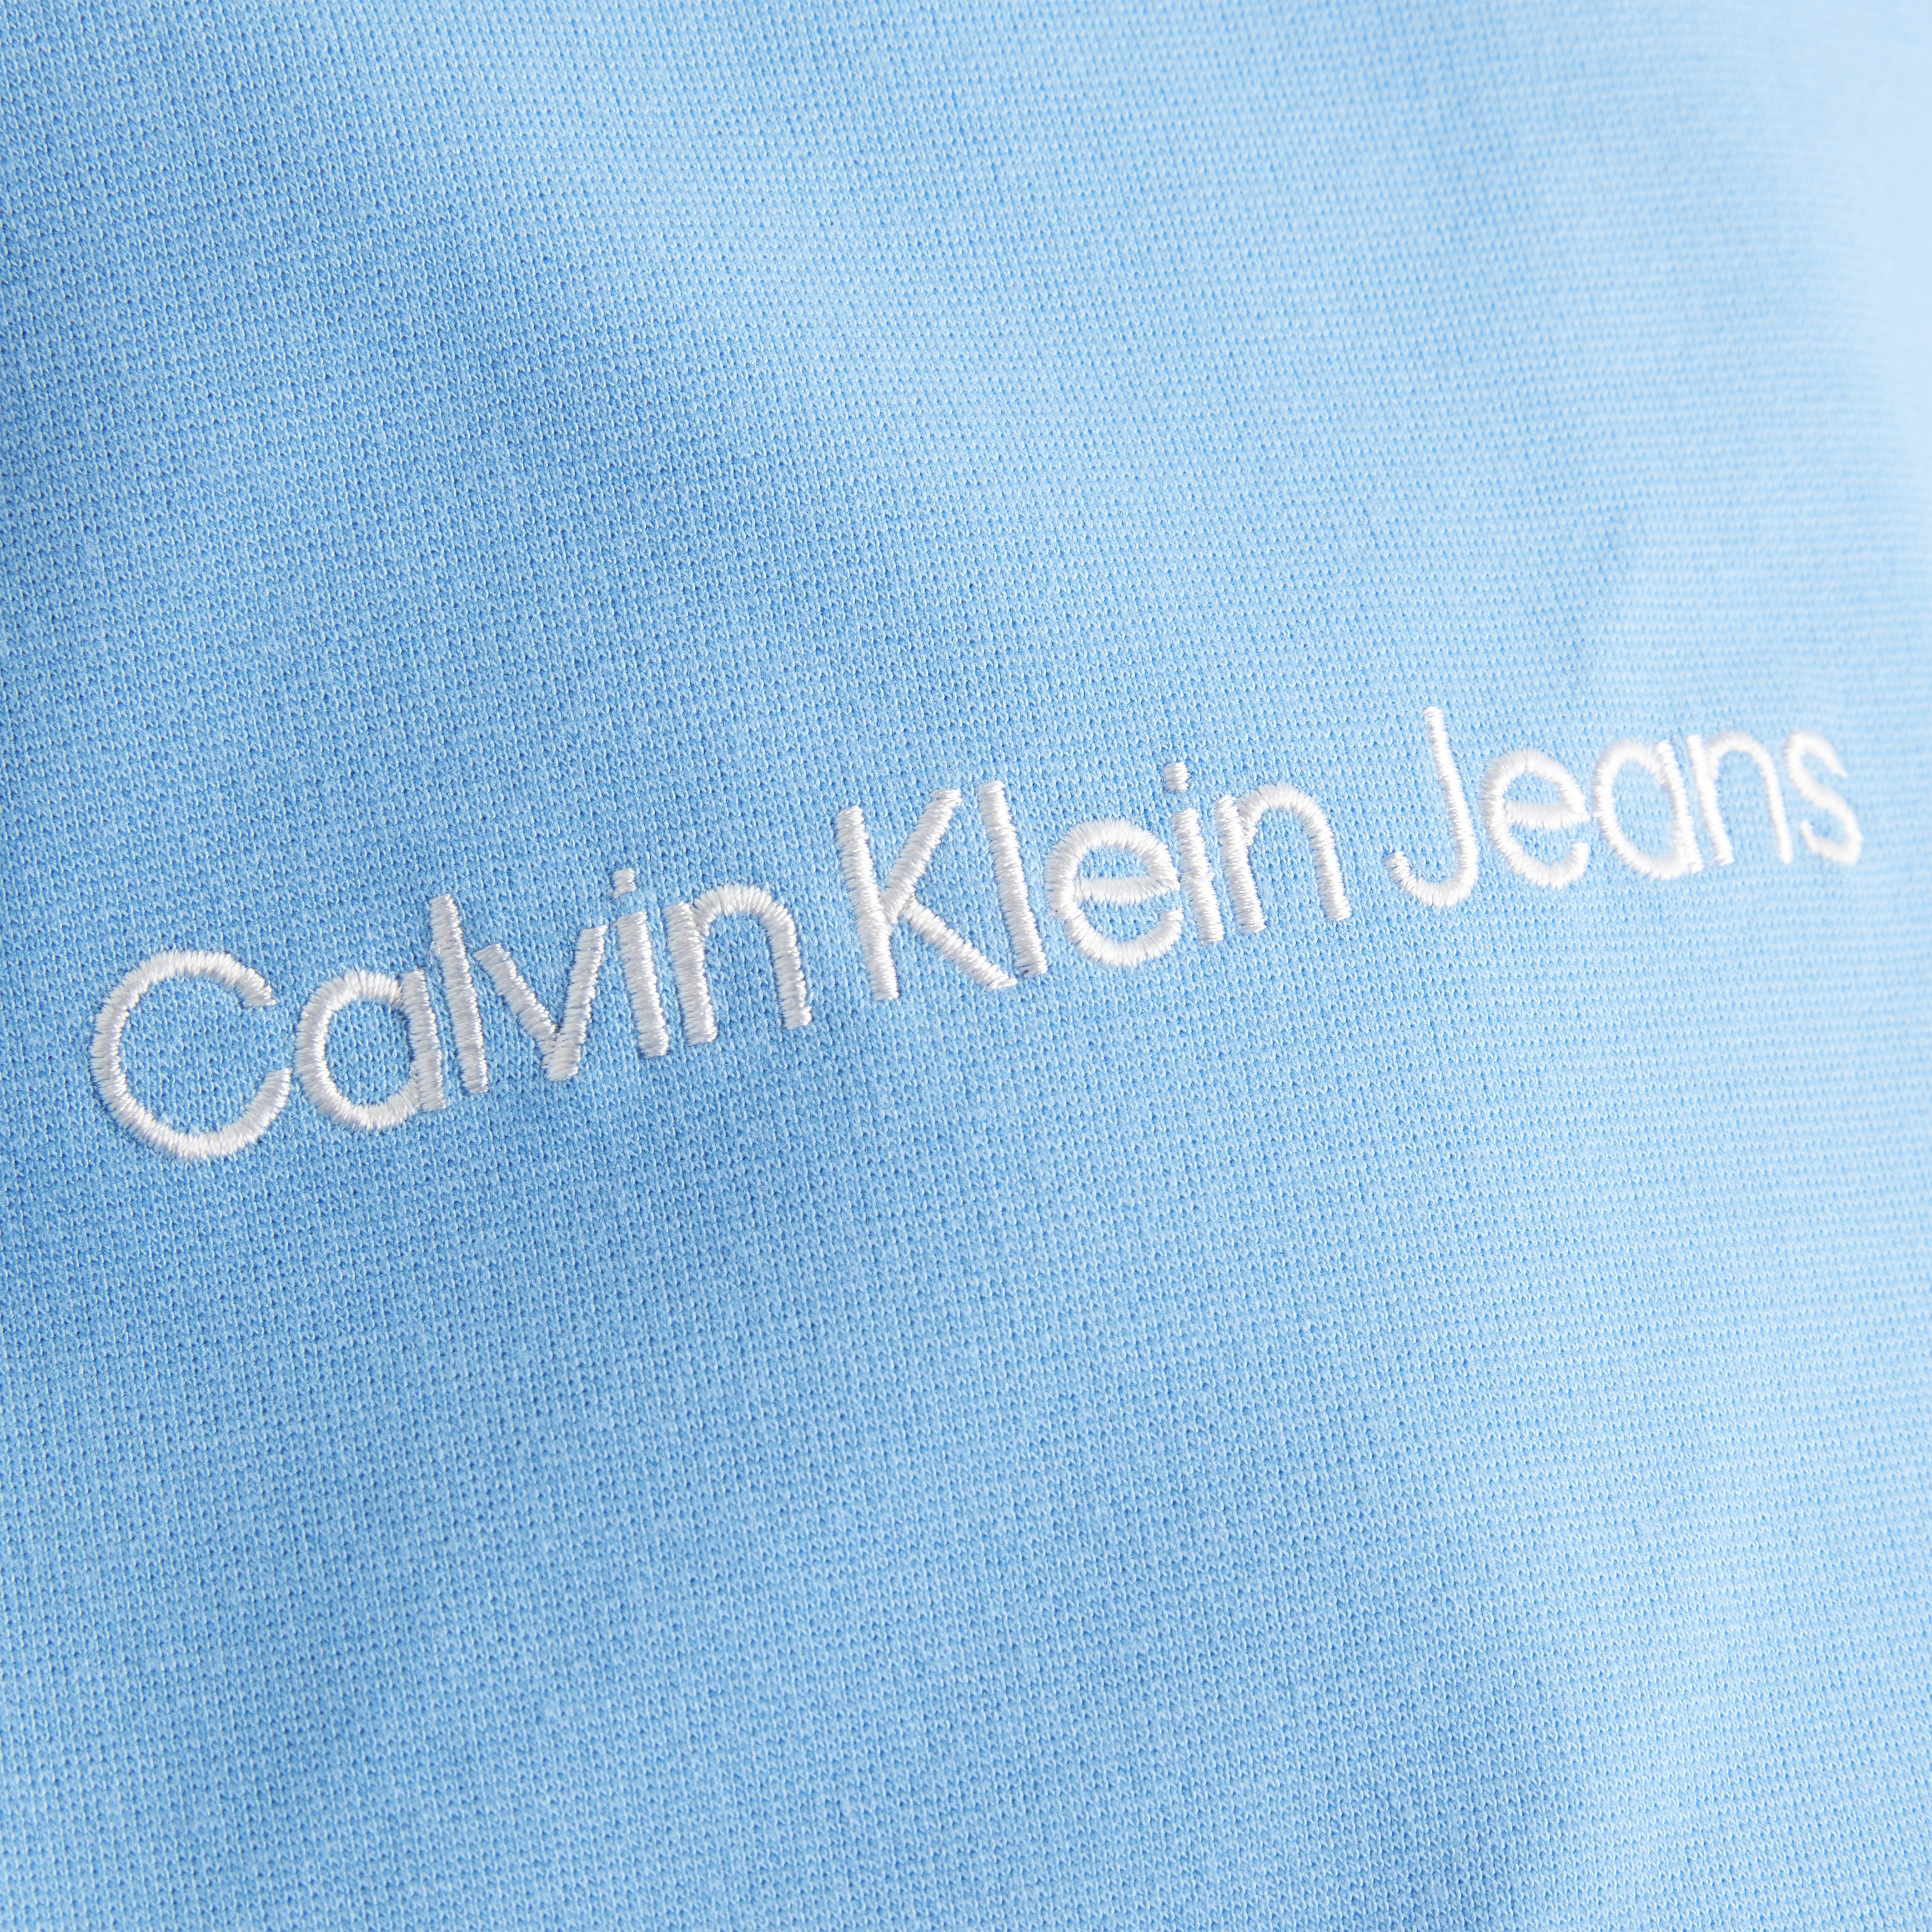 Calvin Klein Jeans - Abito Mono Spalla in Jersey, Azzurro, large image number 2